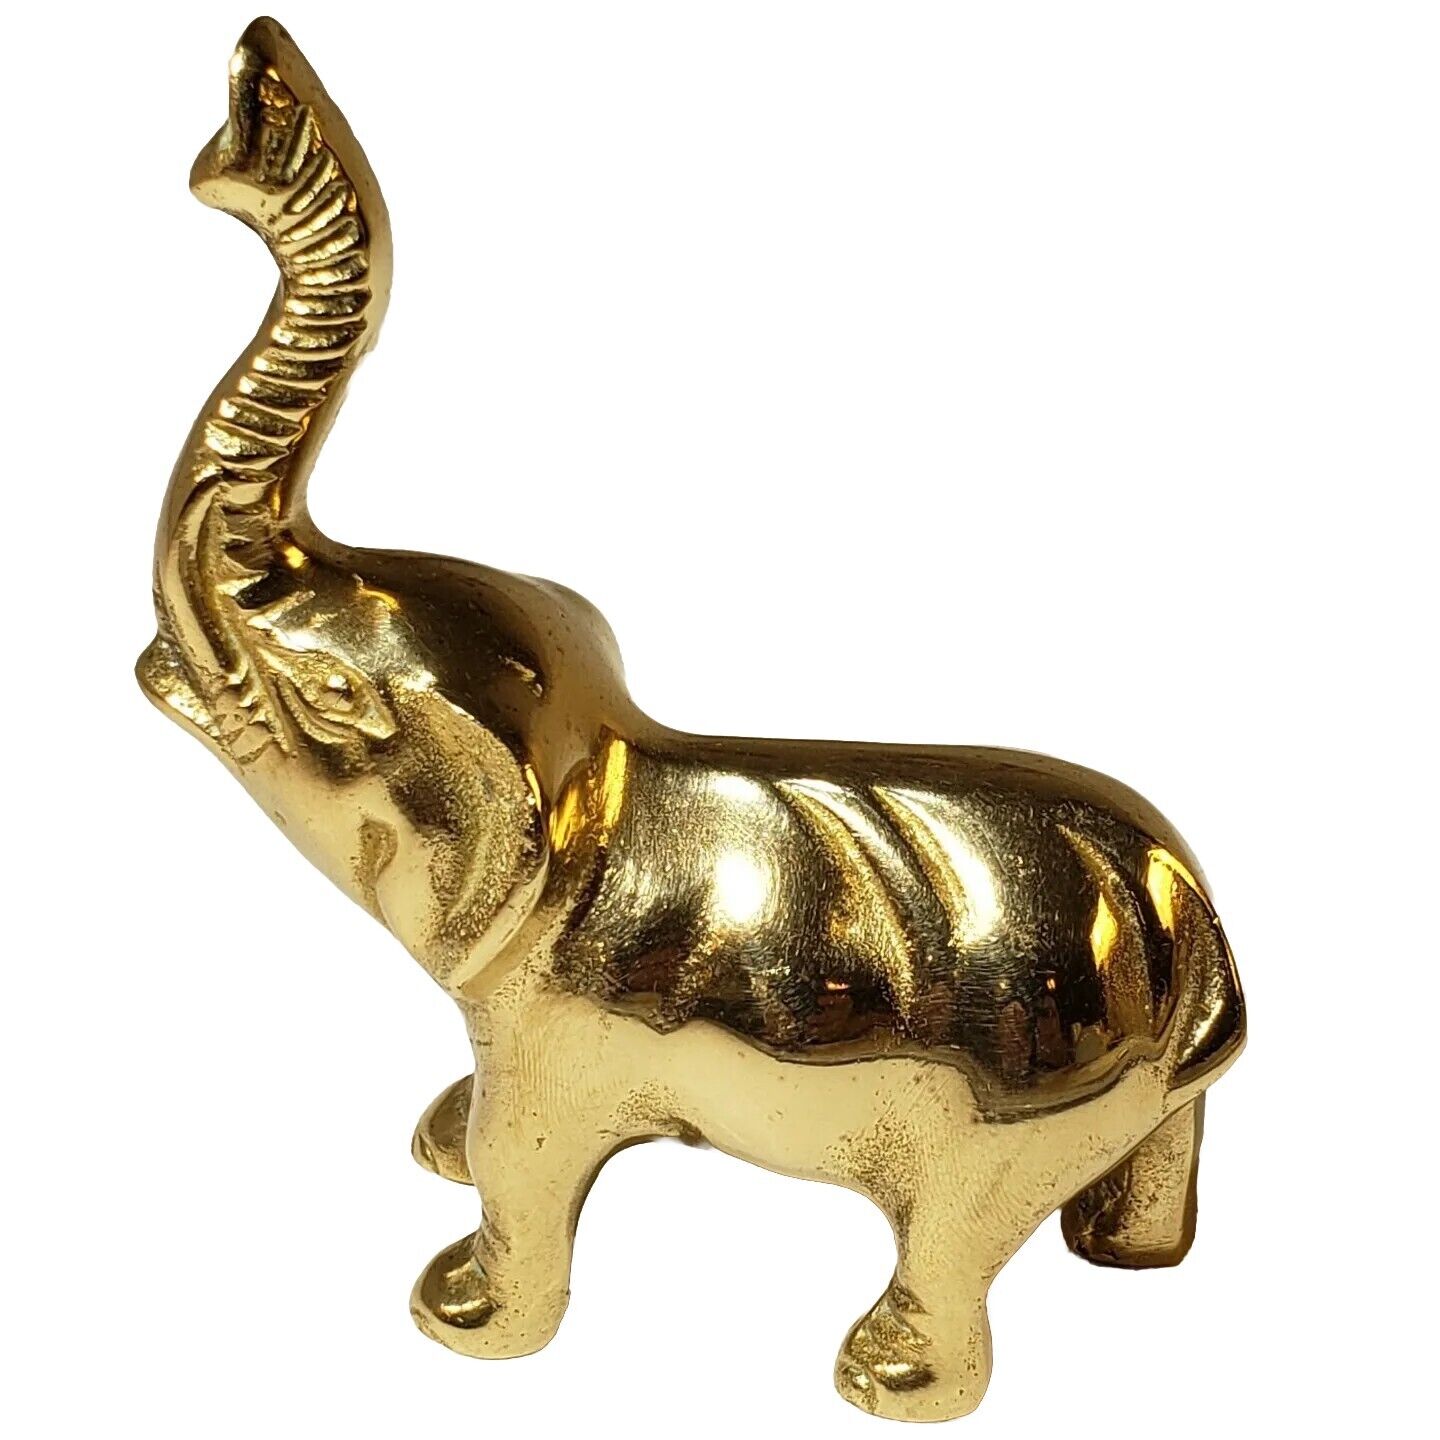 Vintage Solid Brass Elephant Ring Holder Figurine Leonard Silver MFG. Co. Korea 